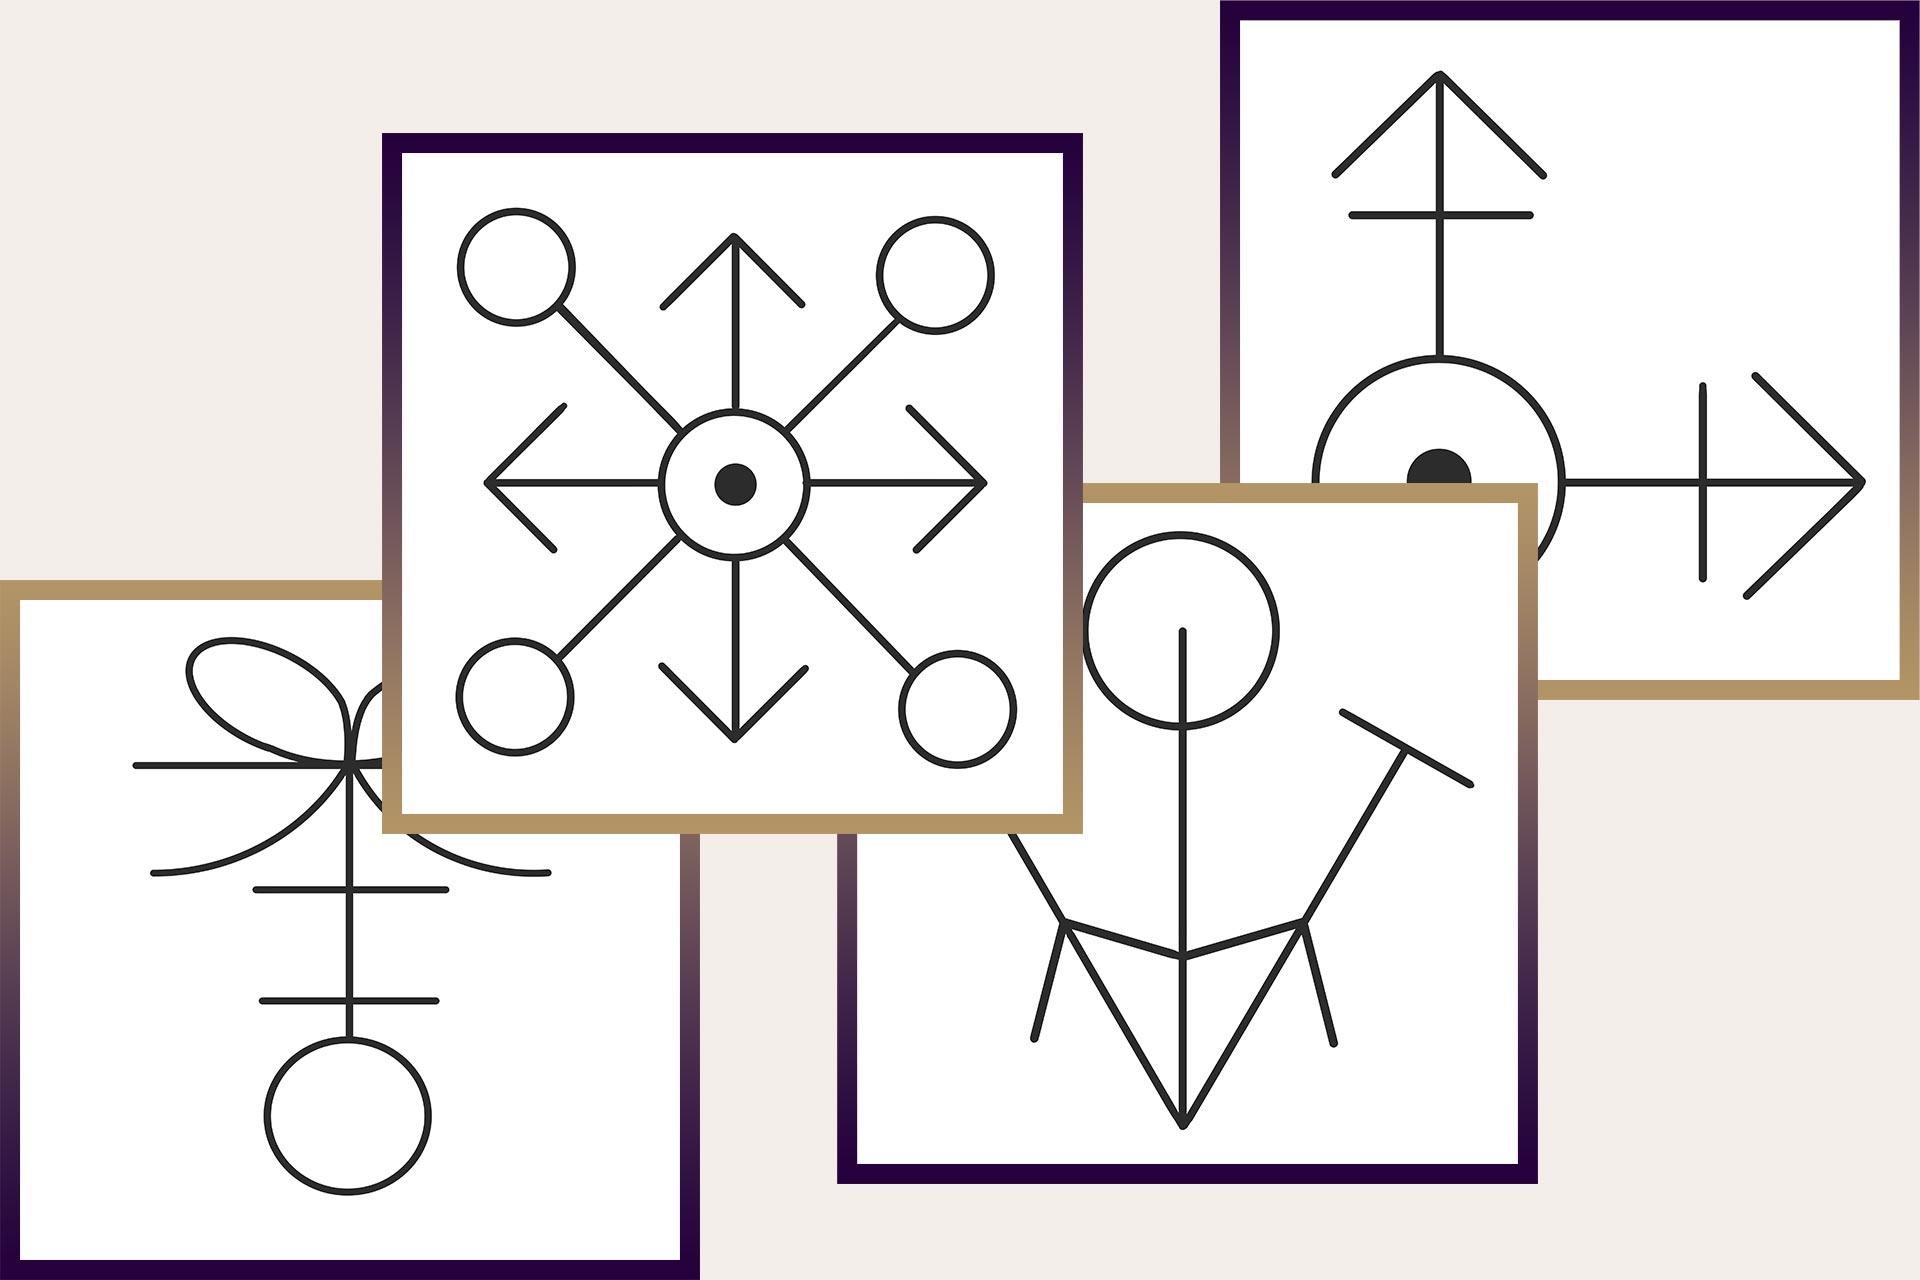 image of 4 Ankarrah symbols